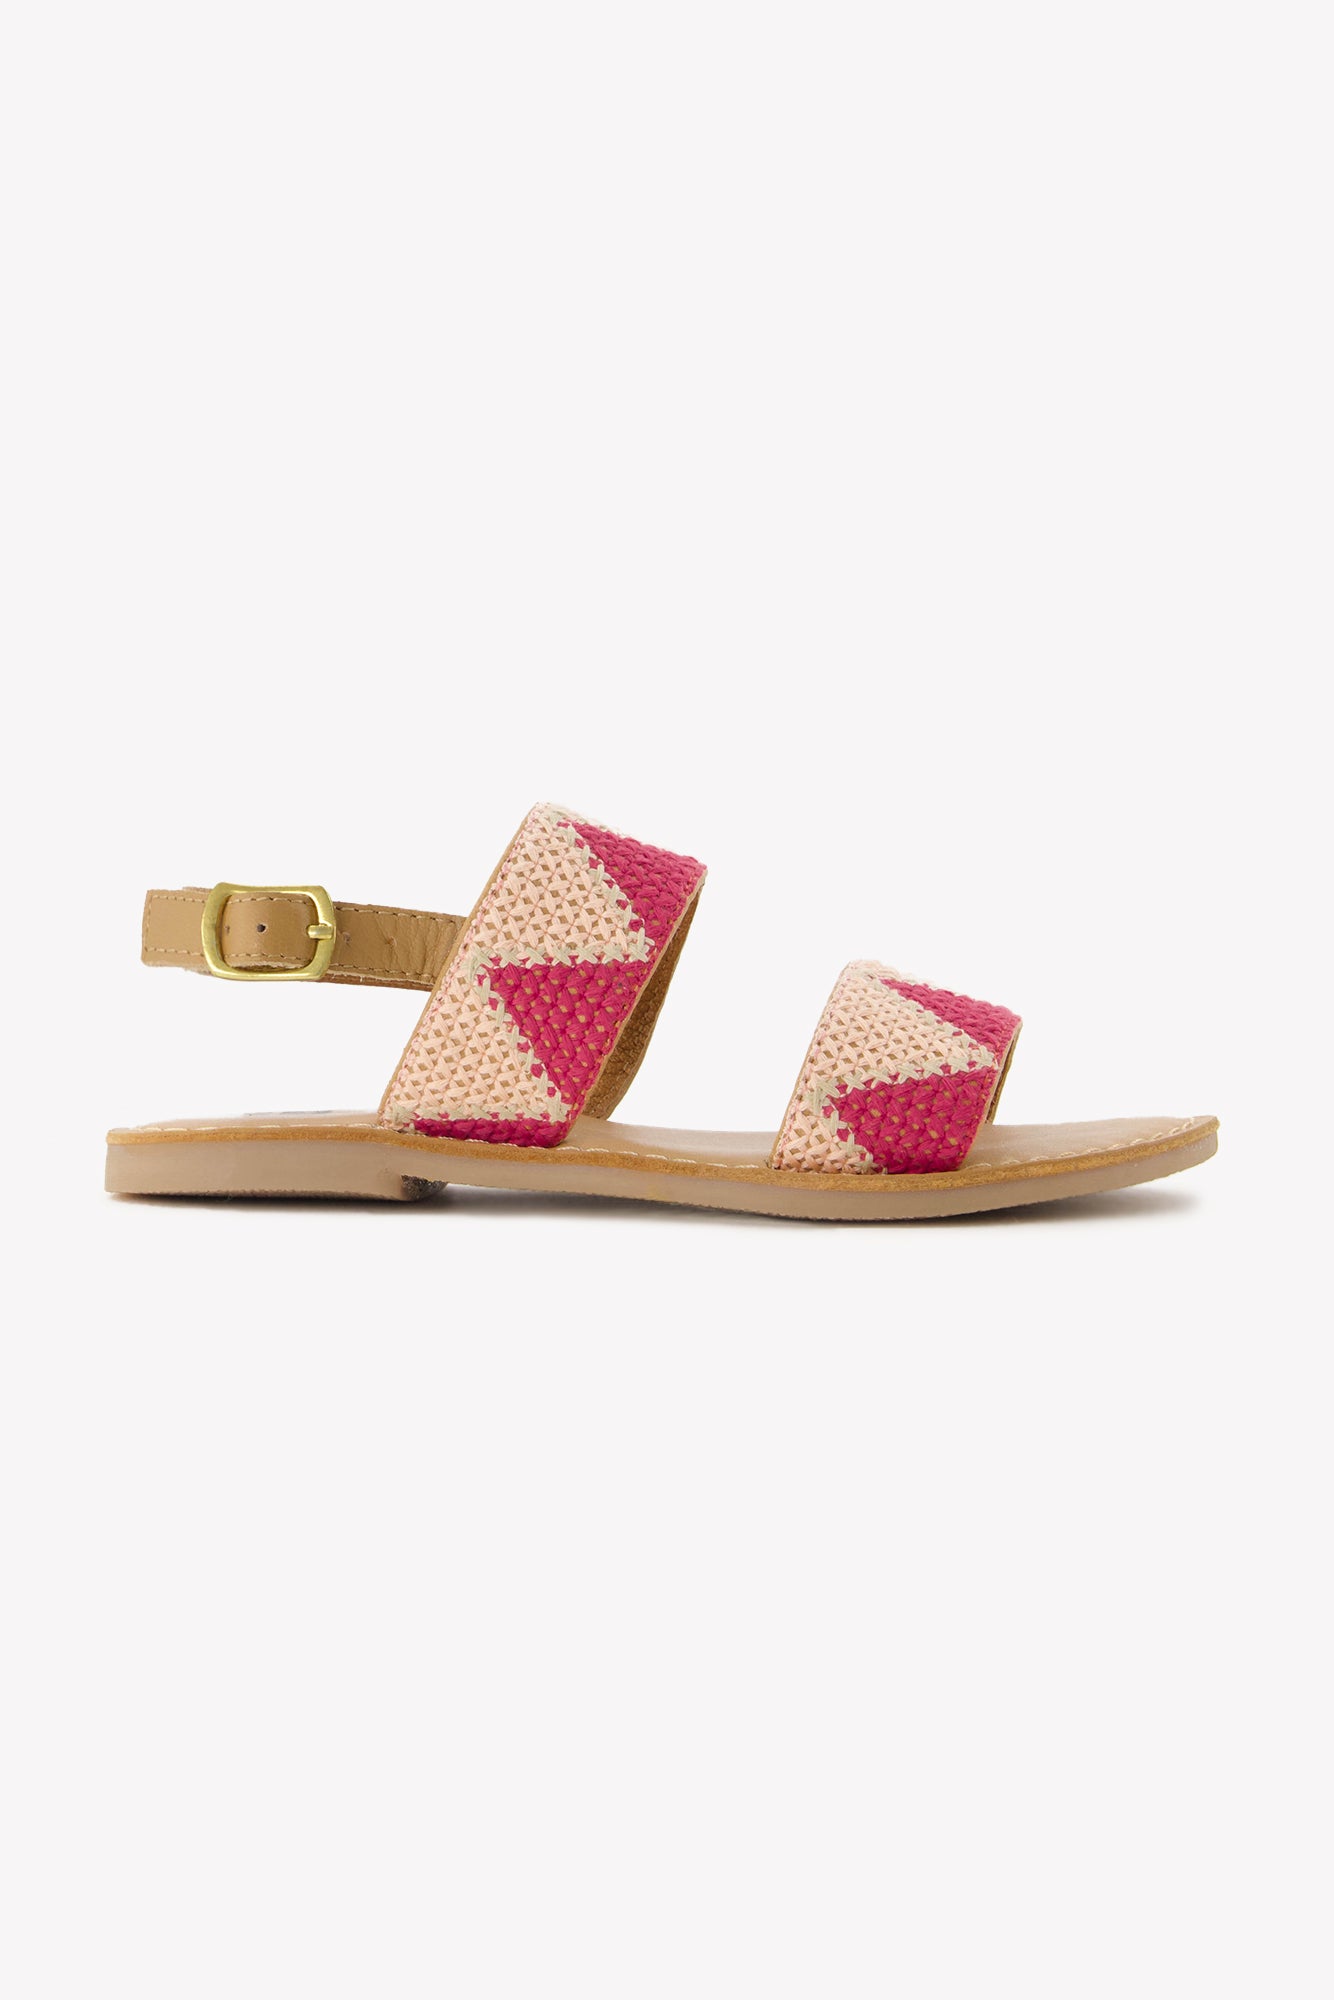 Sandals - Sandra Pink Cross dots leather